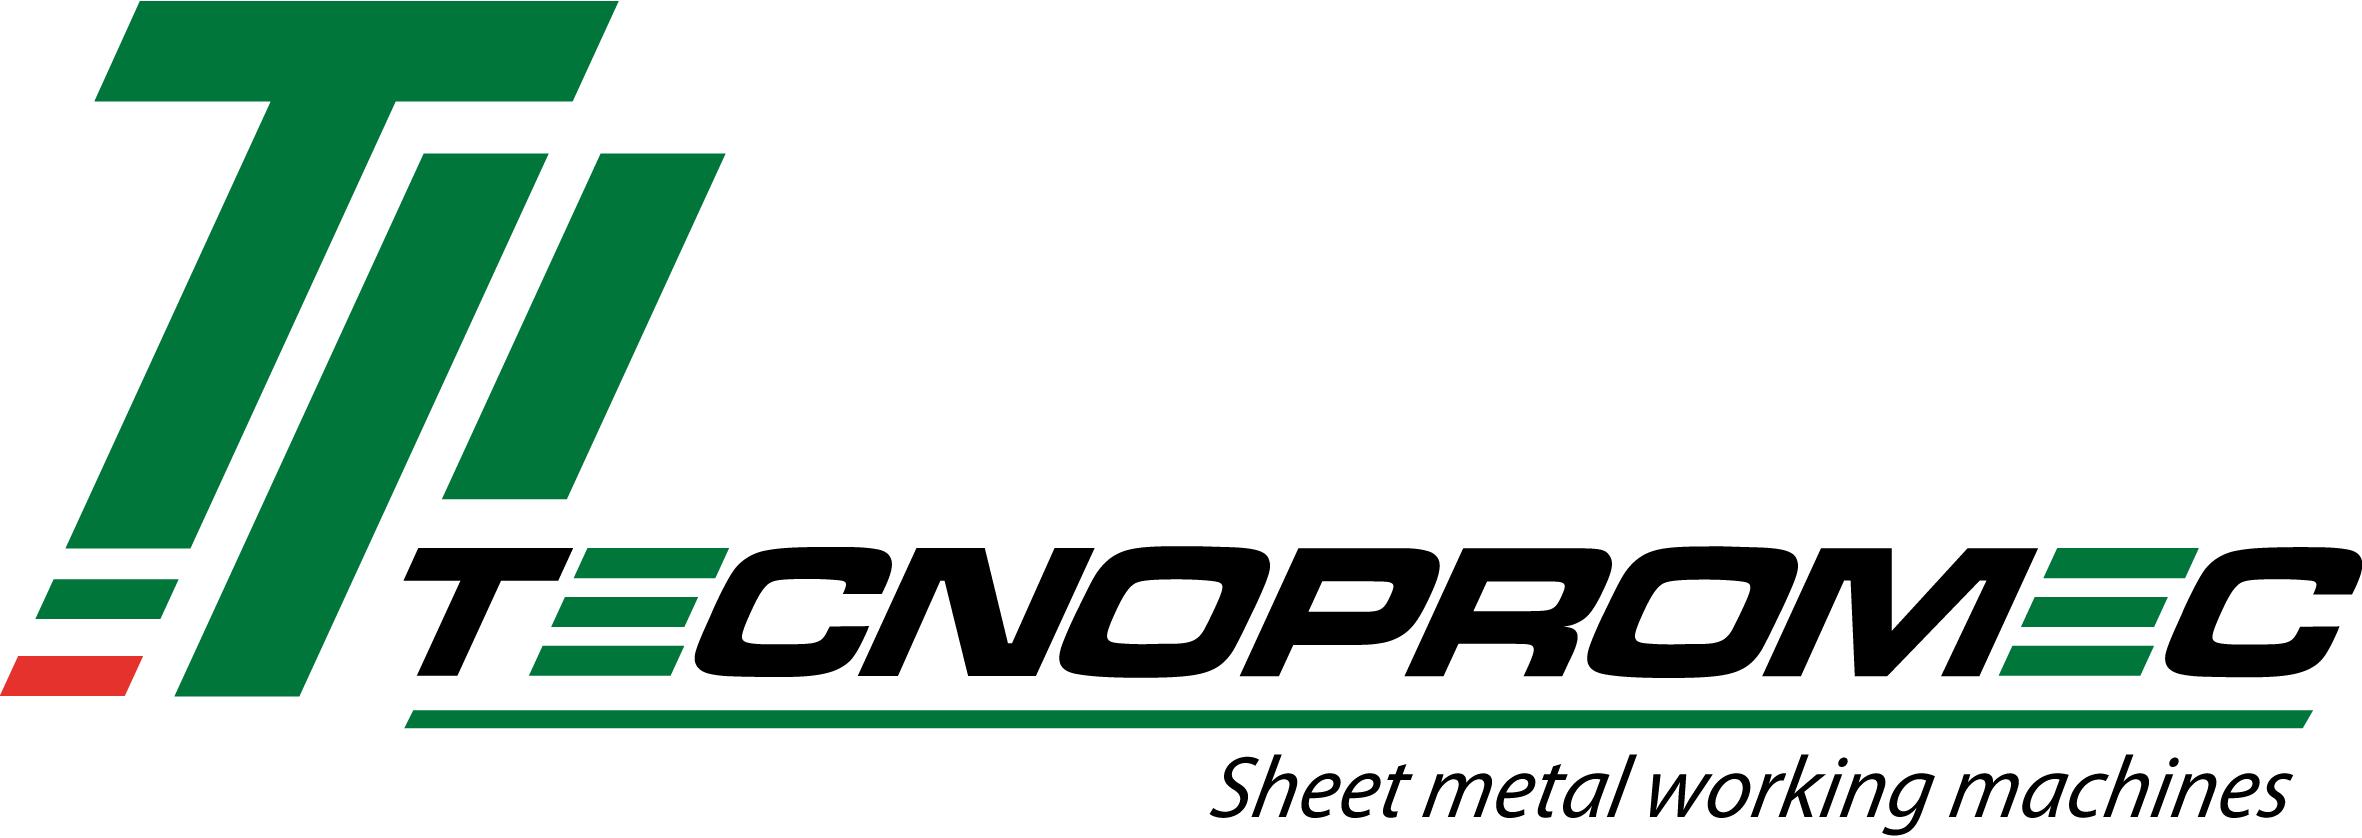 loghi_clienti_esp_promo_logo-TECNOPROMEC1